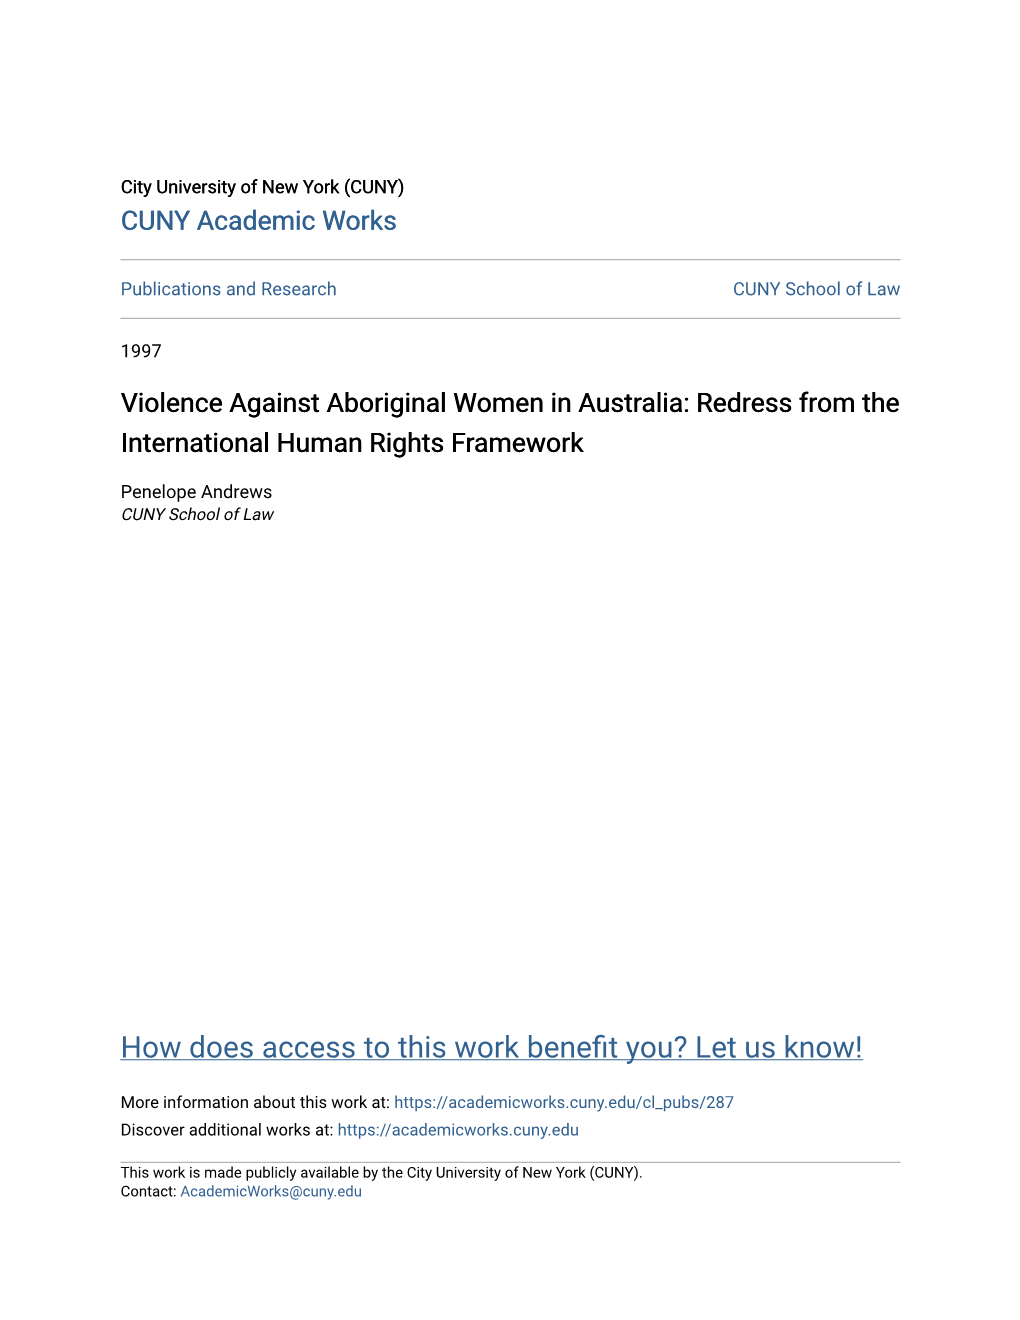 Violence Against Aboriginal Women in Australia: Redress from the International Human Rights Framework